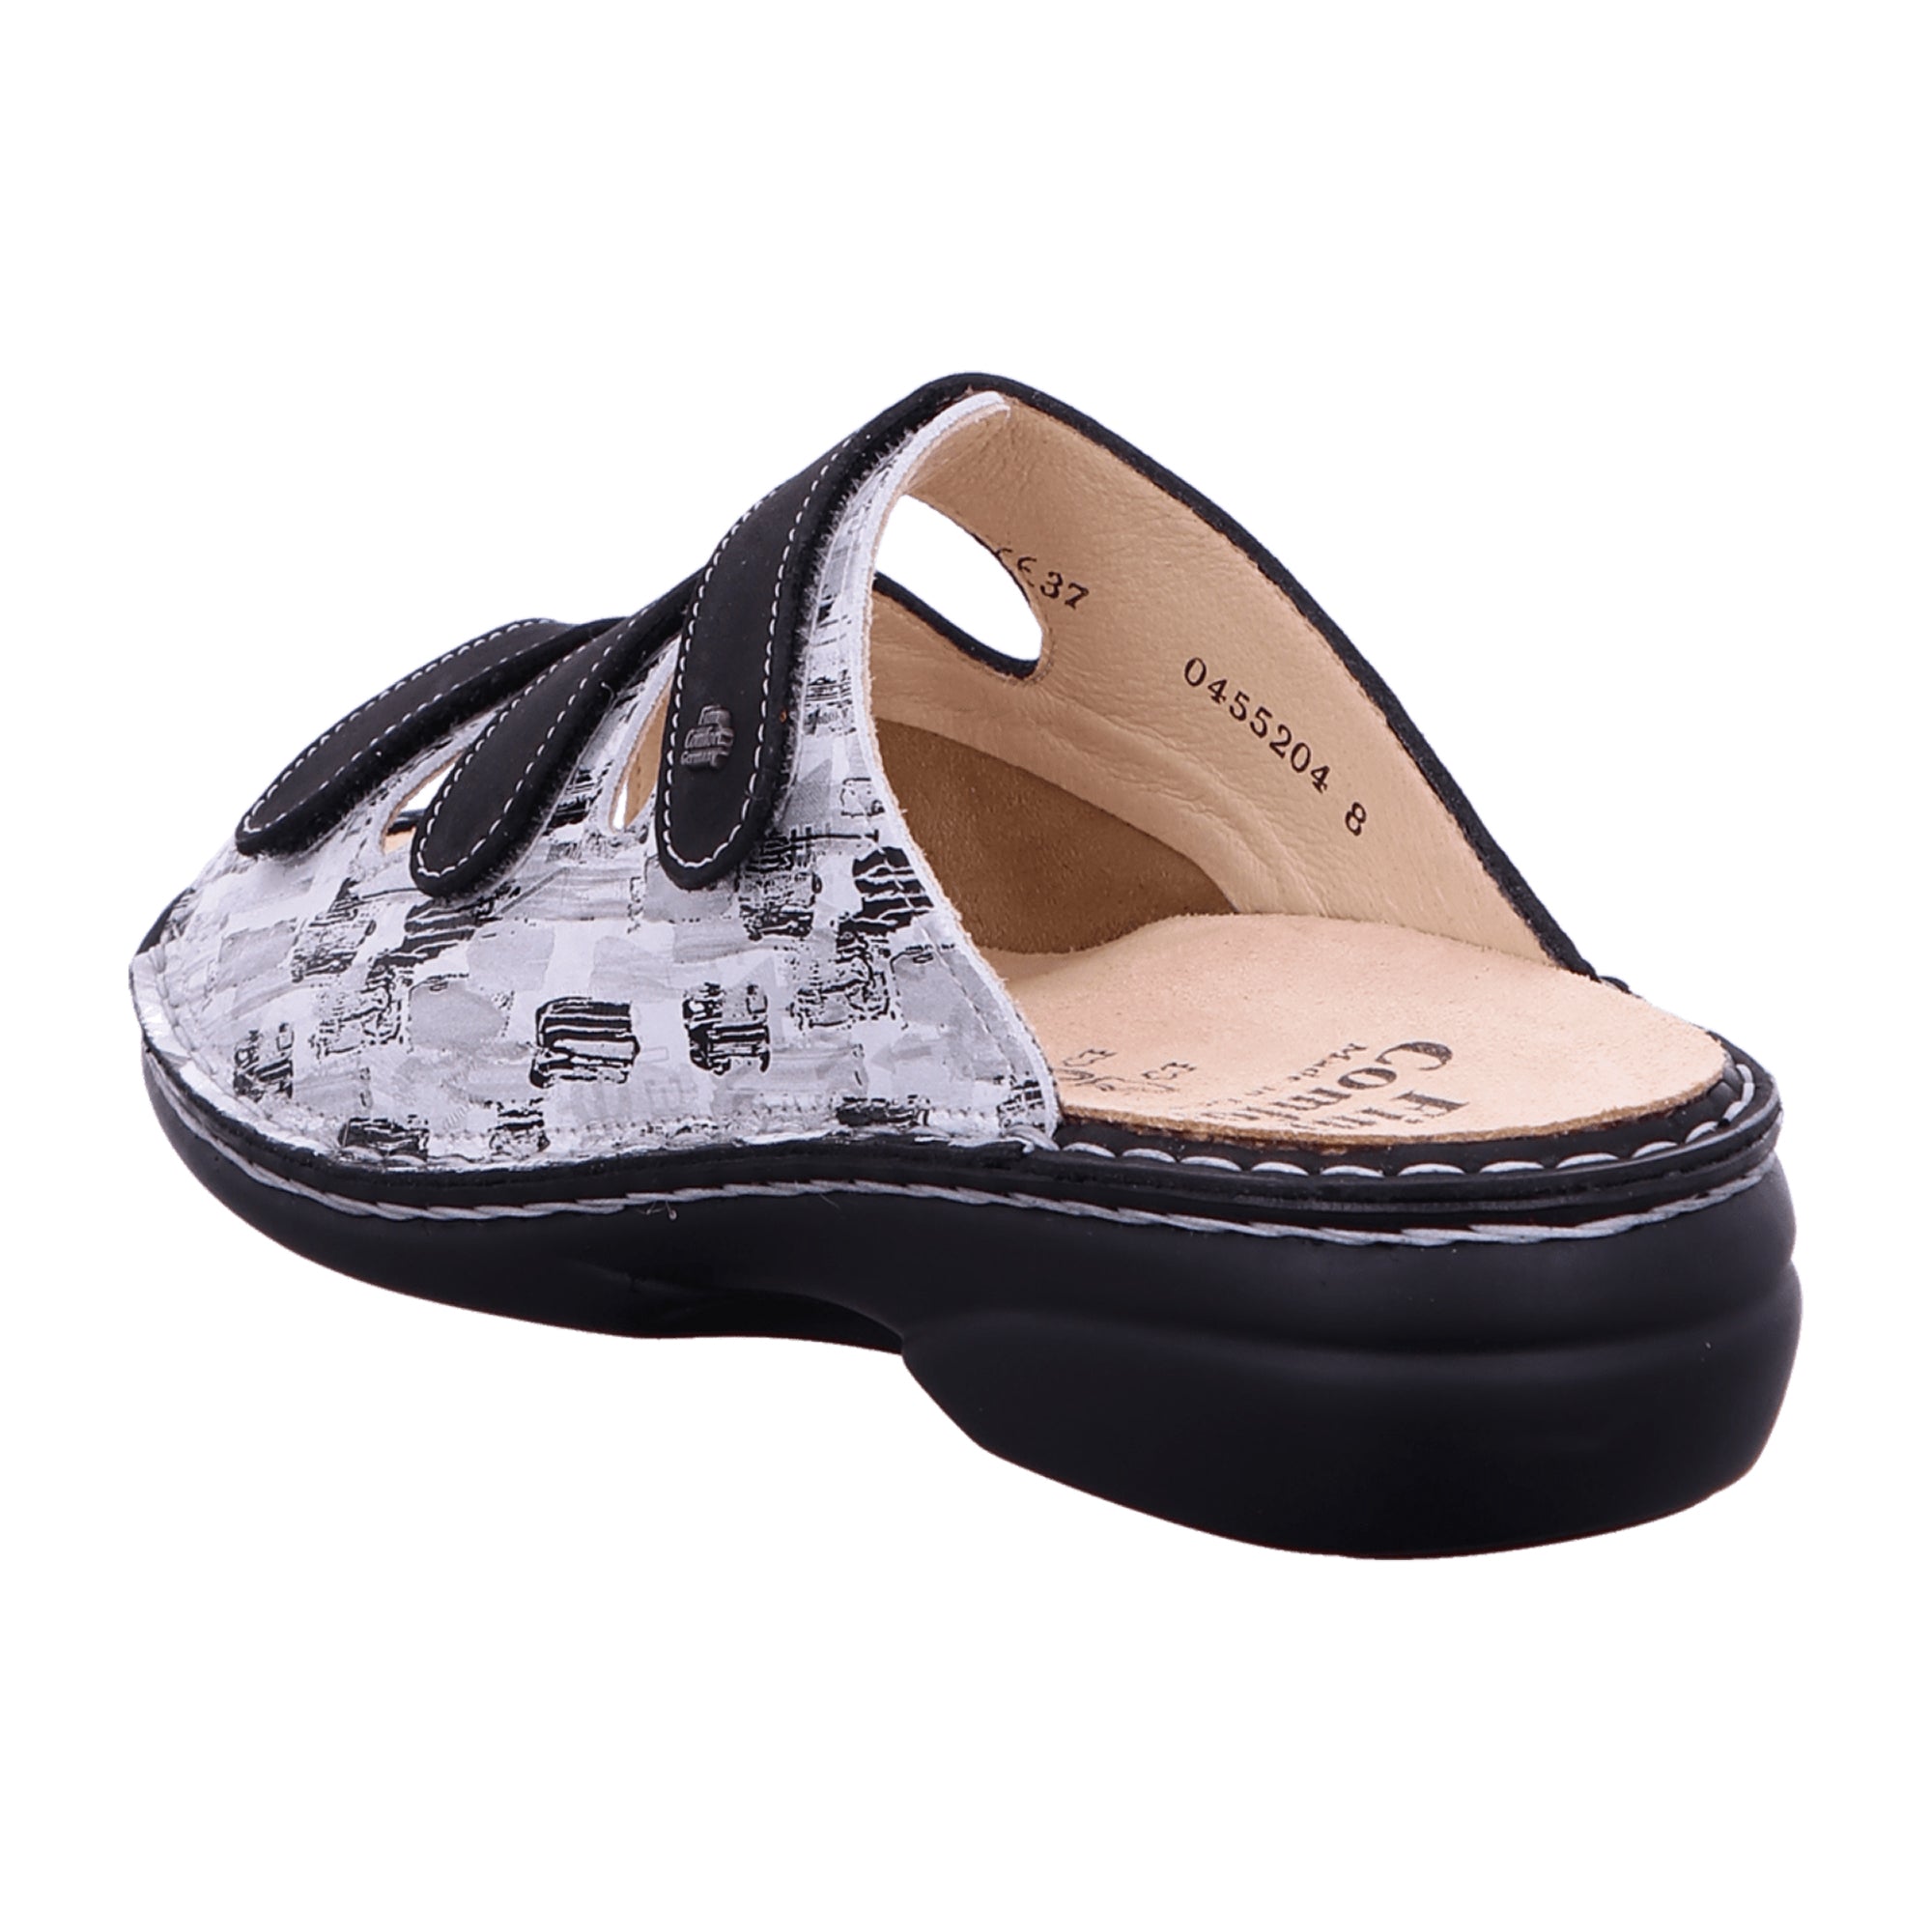 Finn Comfort Cisano Women's Comfortable Sandals - Stylish Silver Finish